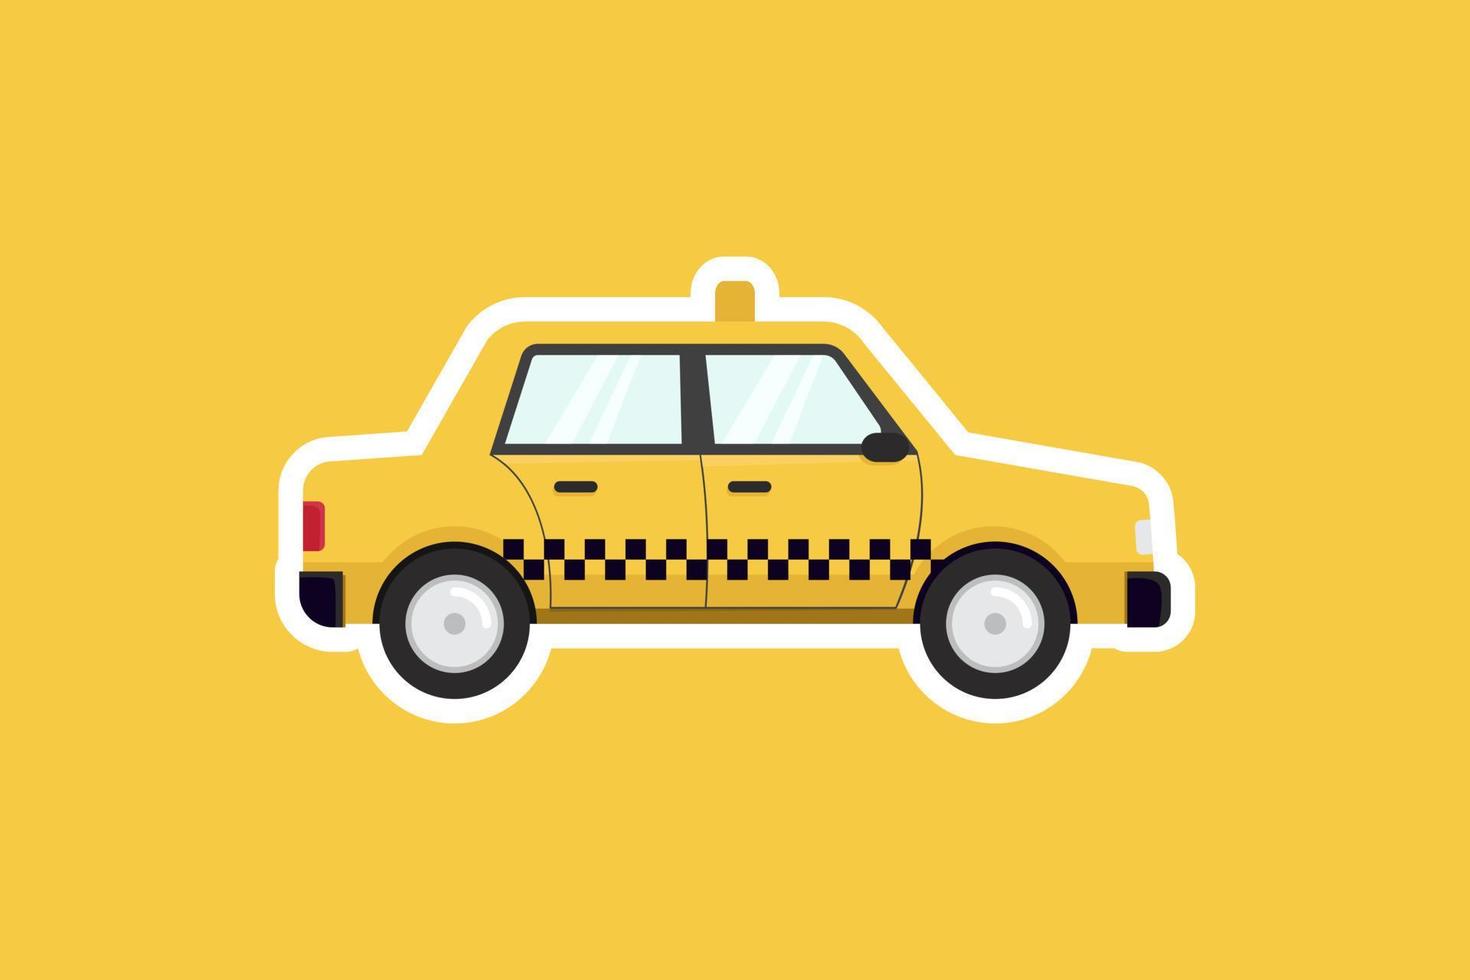 Online taxi service vector design illustration